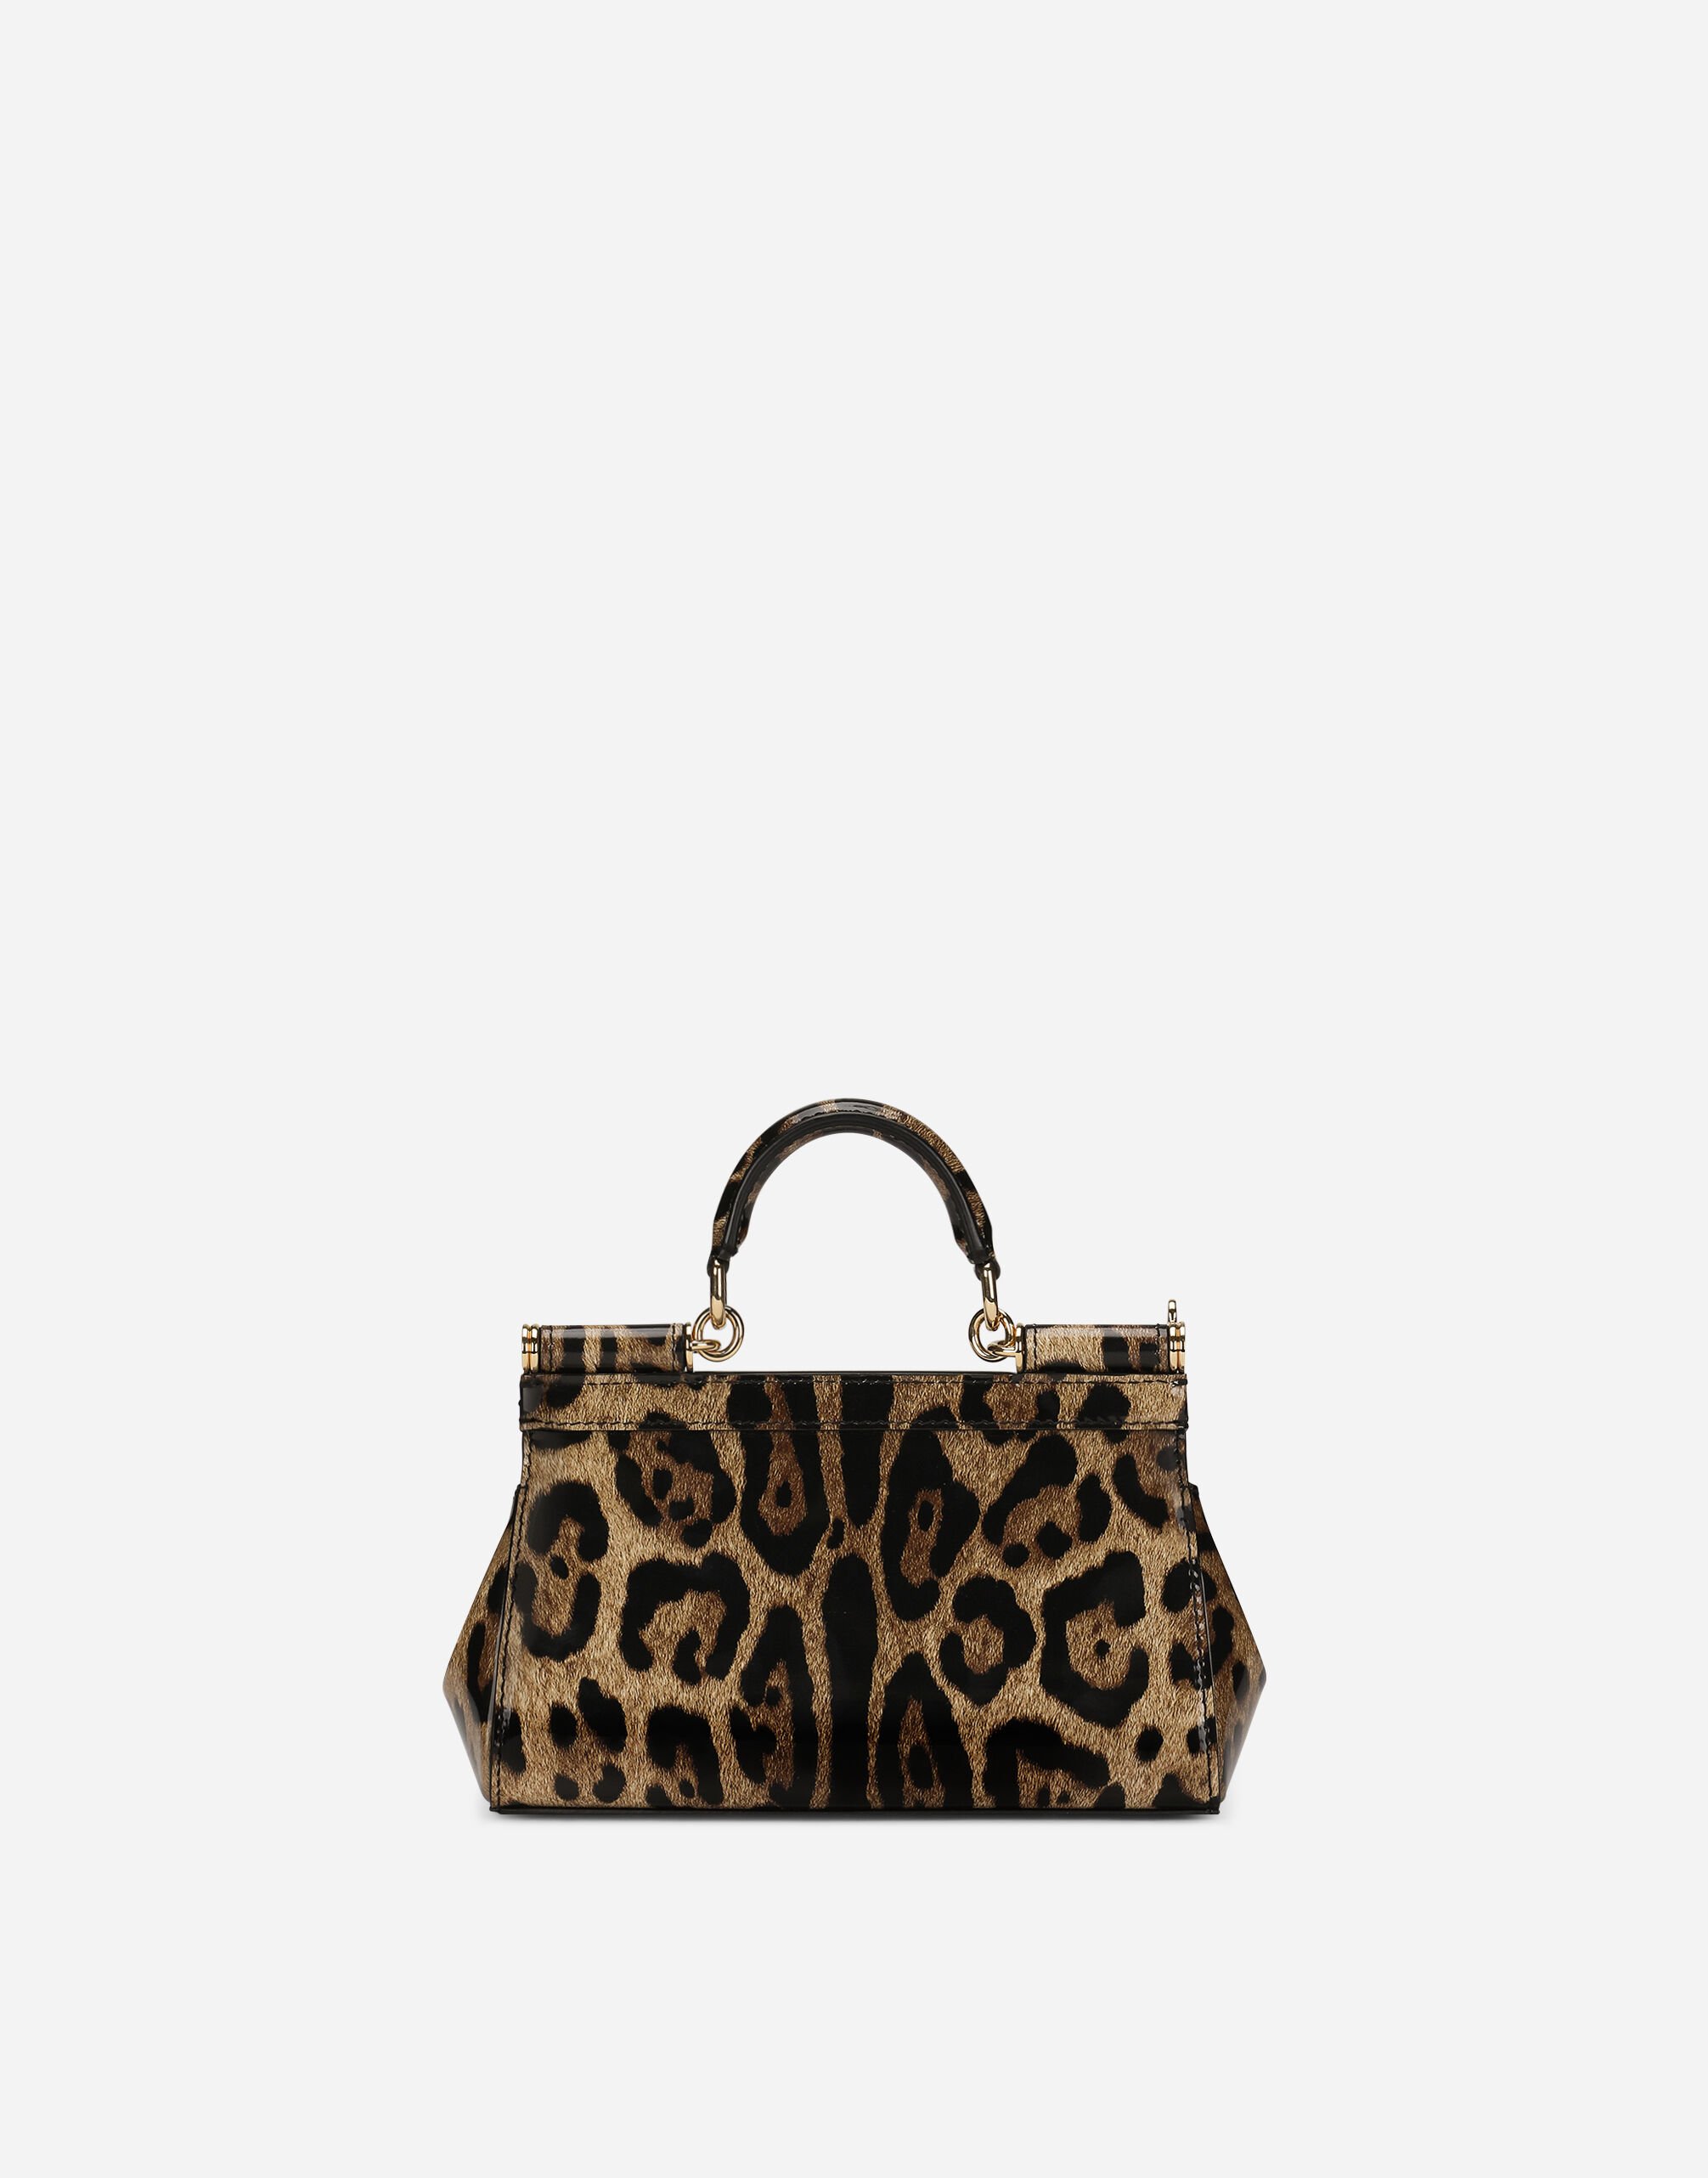 Buy Bagsy Malone Stylish Animal Print Bag - BMWSL0140PL at Amazon.in